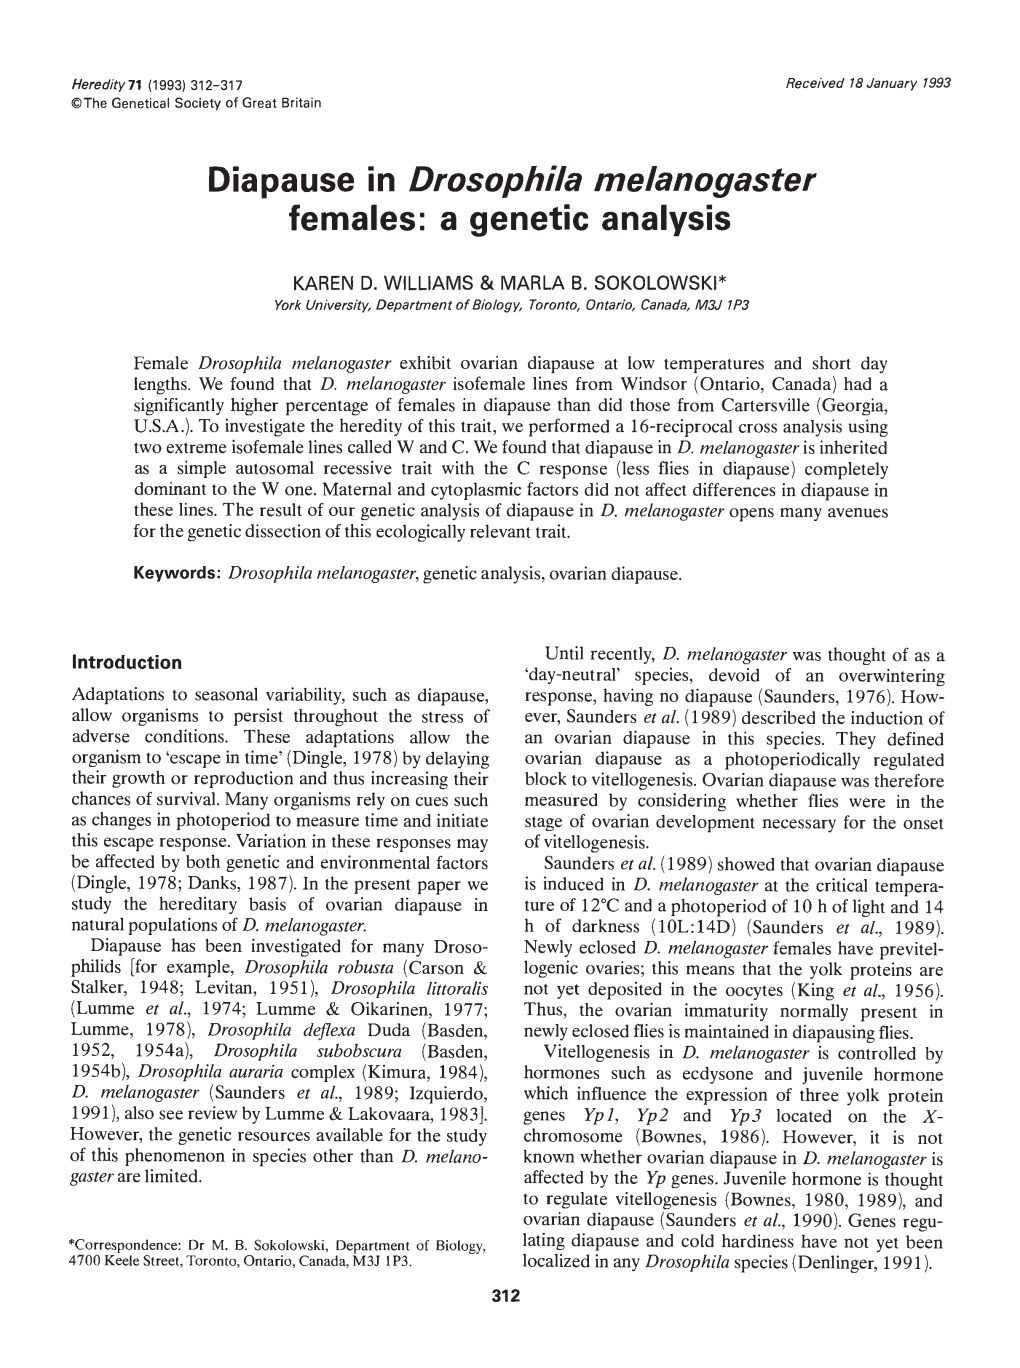 Diapause in Drosophila Melanogaster Females: a Genetic Analysis